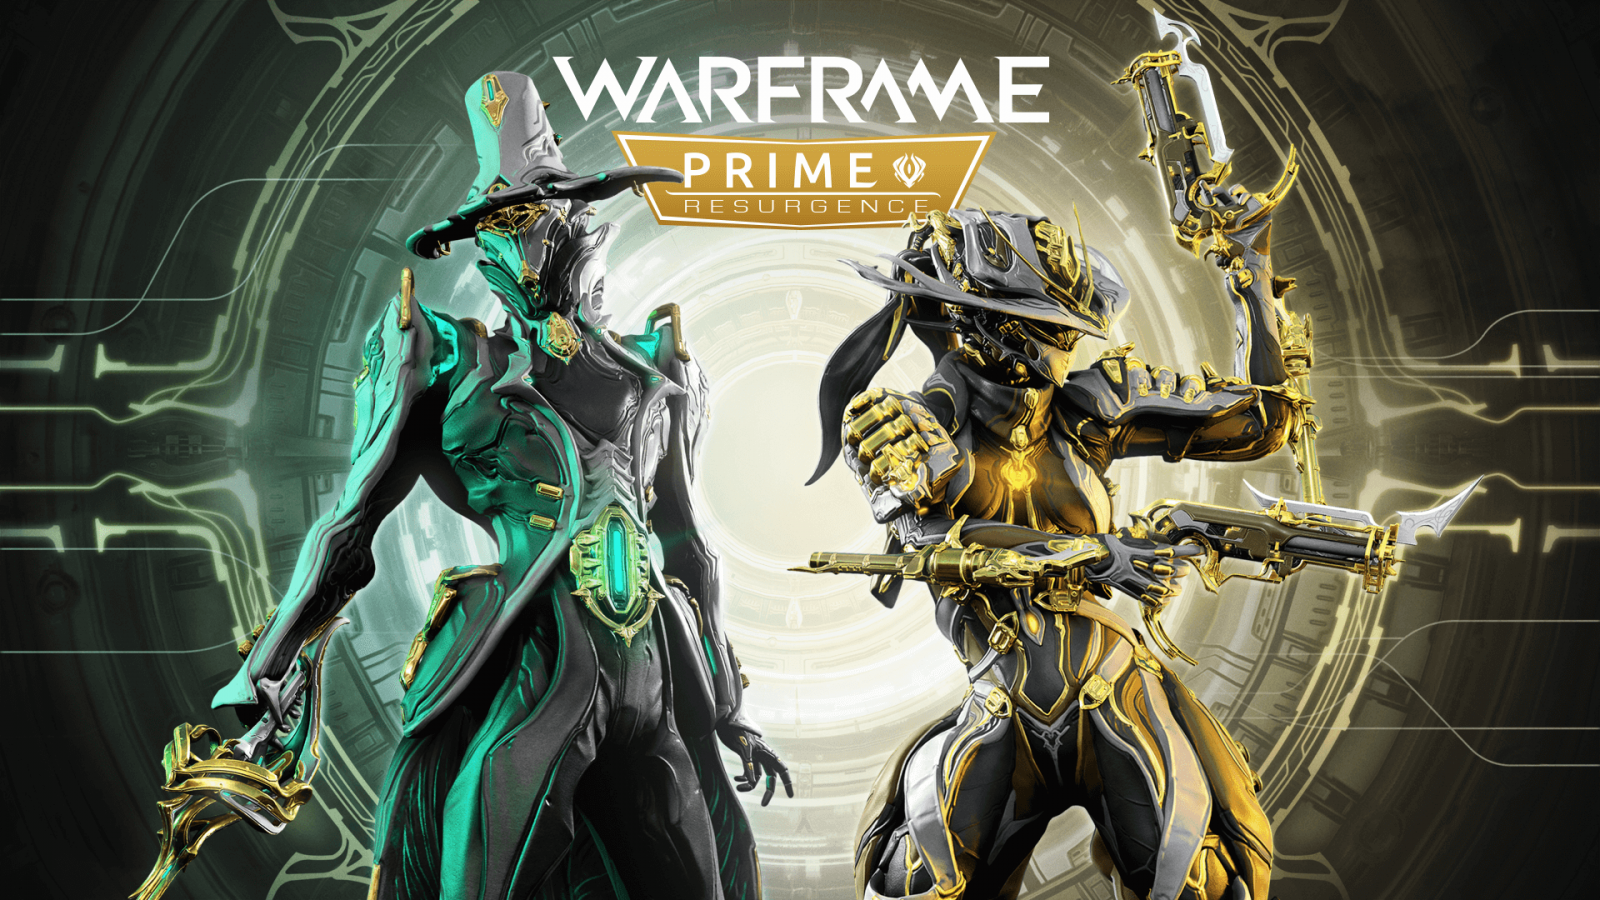 Ressurgência Prime: Mesa Prime e Limbo Prime